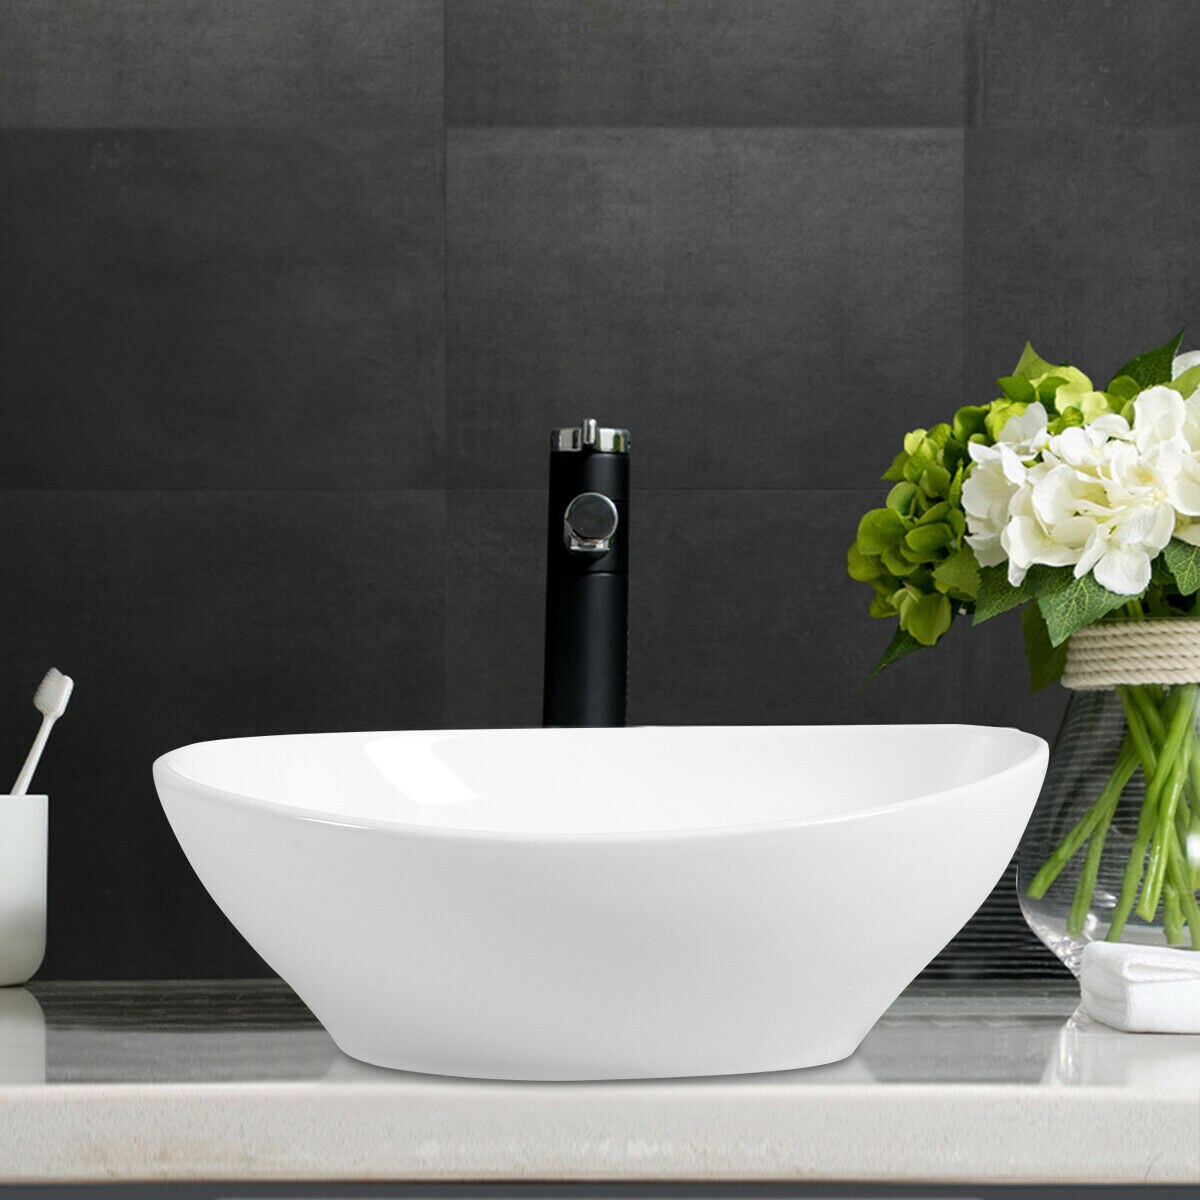 Goplus White Ceramic Vessel Oval Modern Bathroom Sink with Drain ...